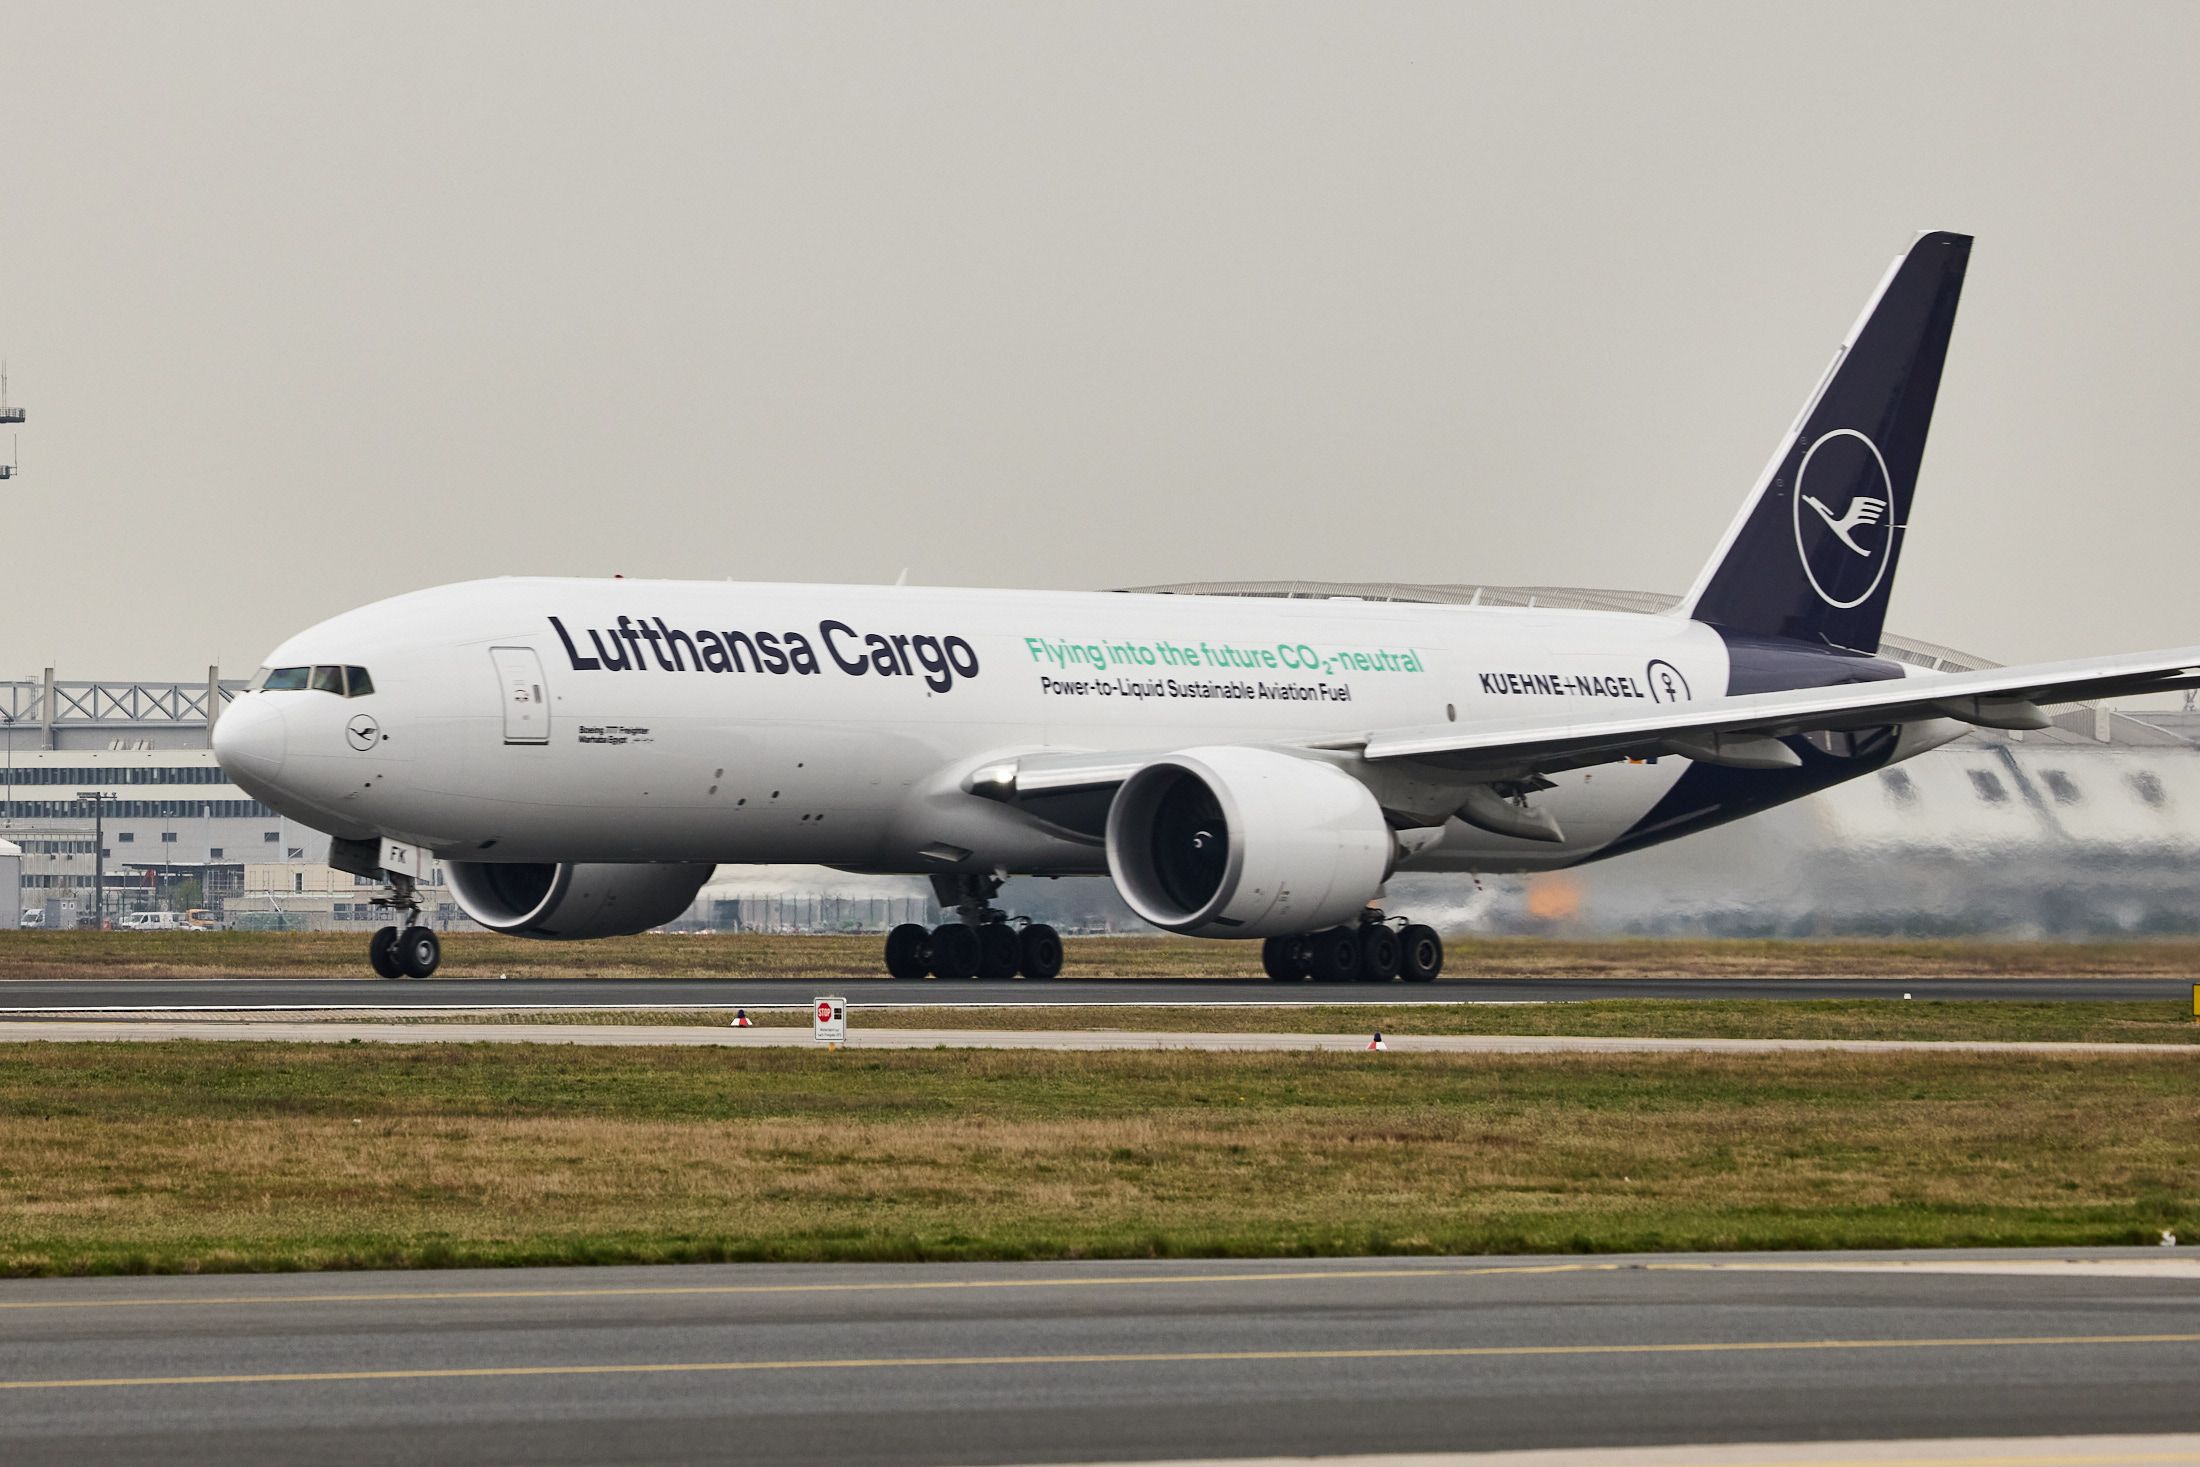 Lufthansa cargo aircraft on runway 